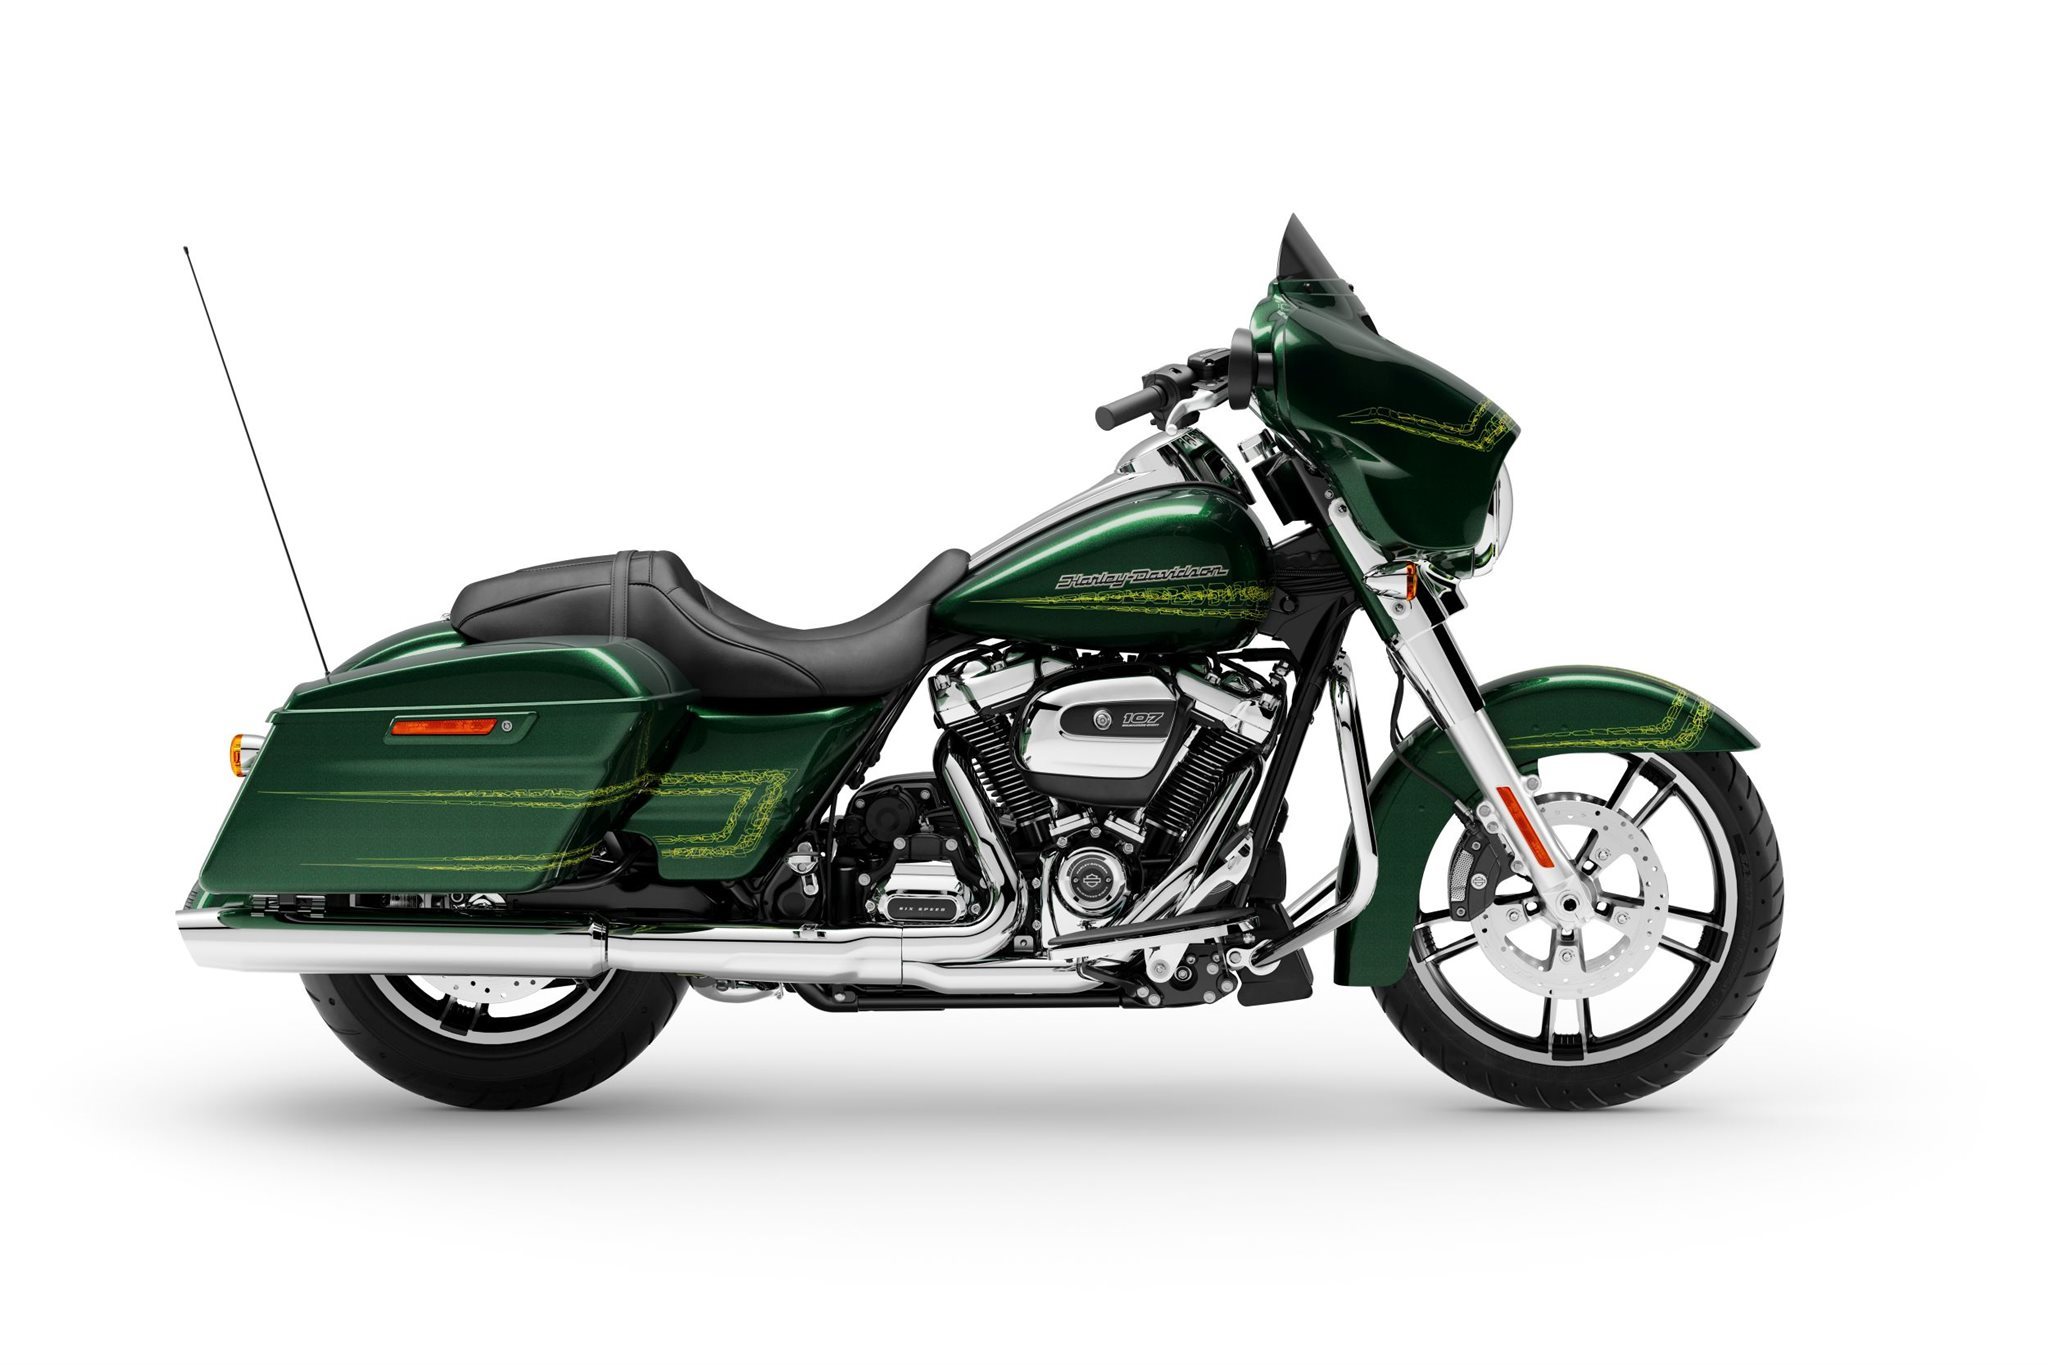 Motorrad Vergleich Harley Davidson Electra Glide Ultra Classic Flhtcu 2015 Vs Harley Davidson Street Glide Flhx 2020